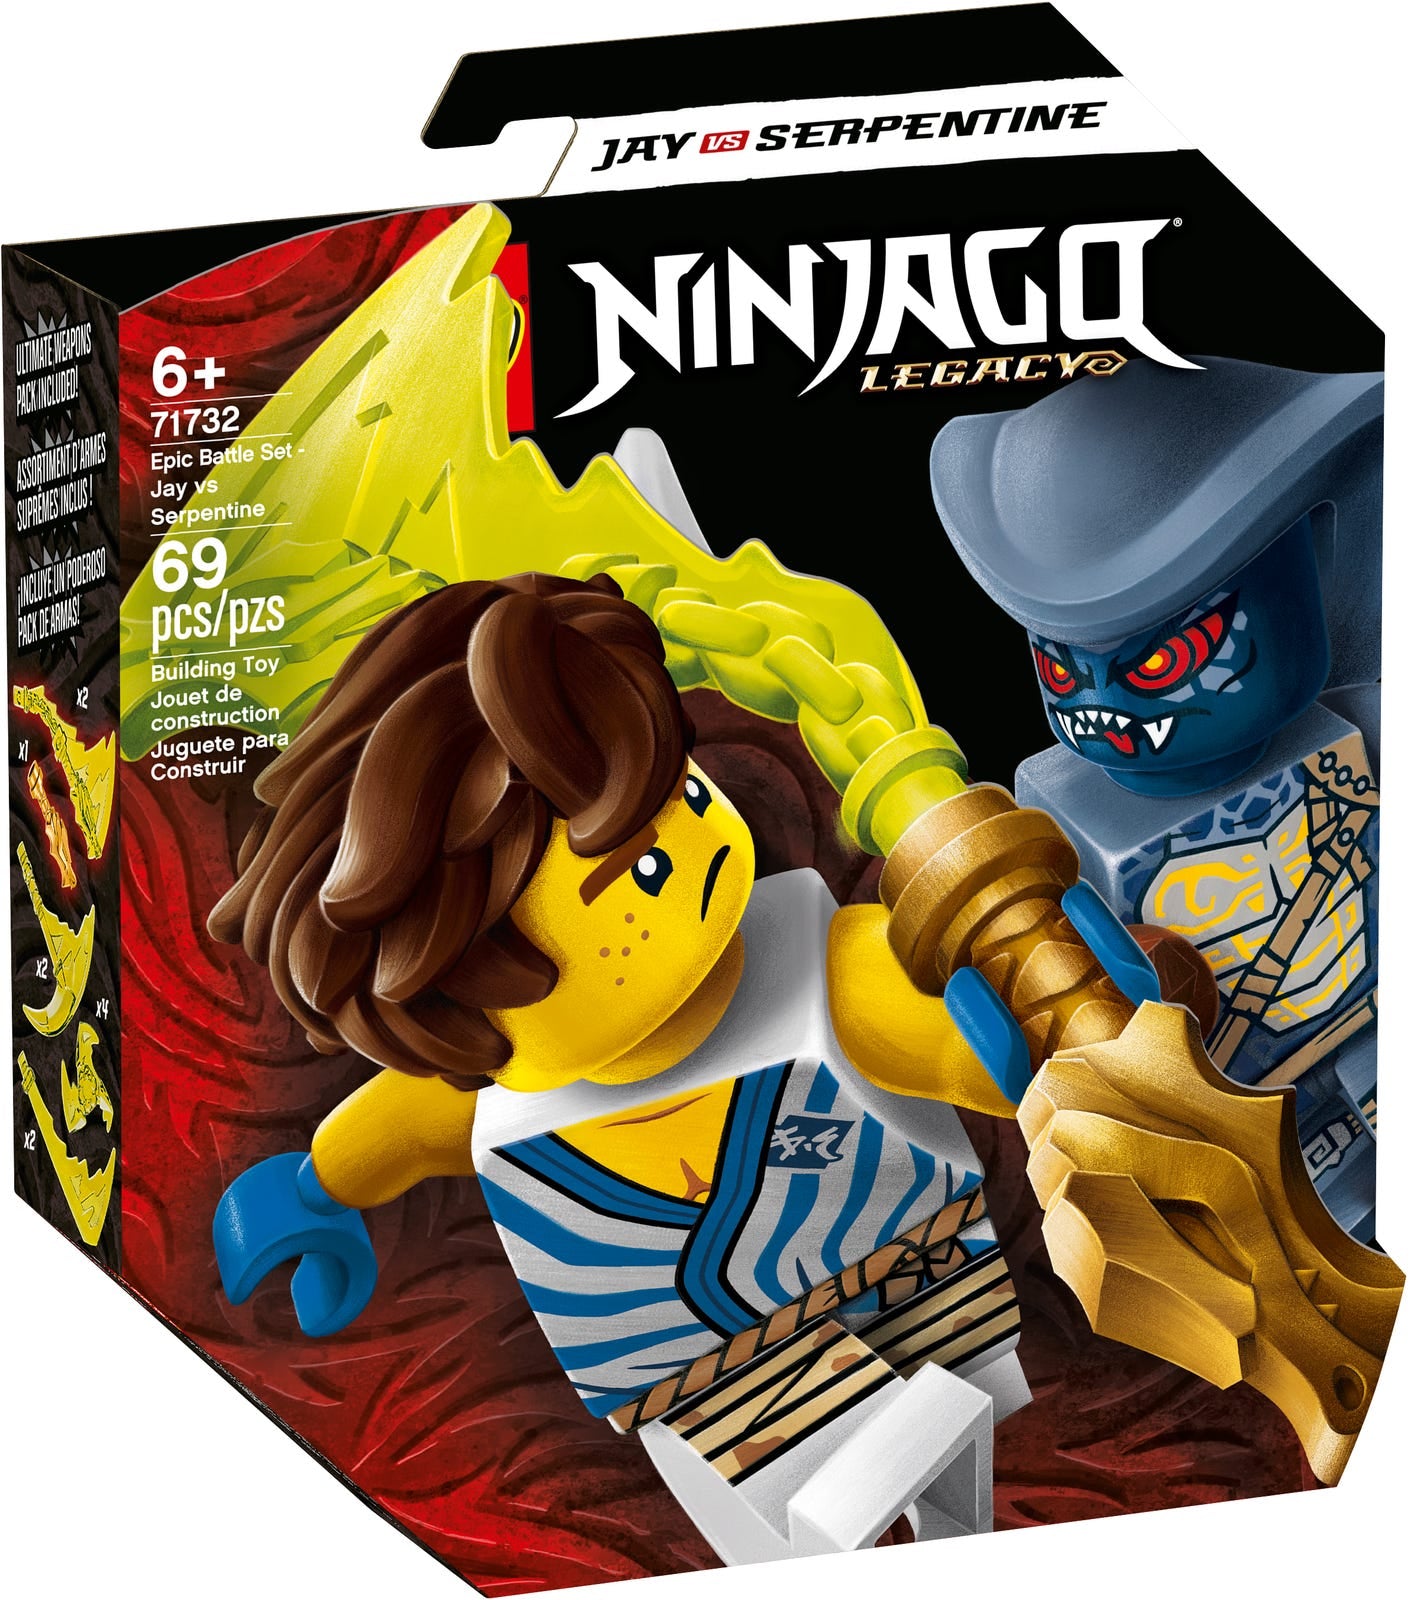 LEGO Ninjago Epic Battle Set - Jay vs Serpentine 71732